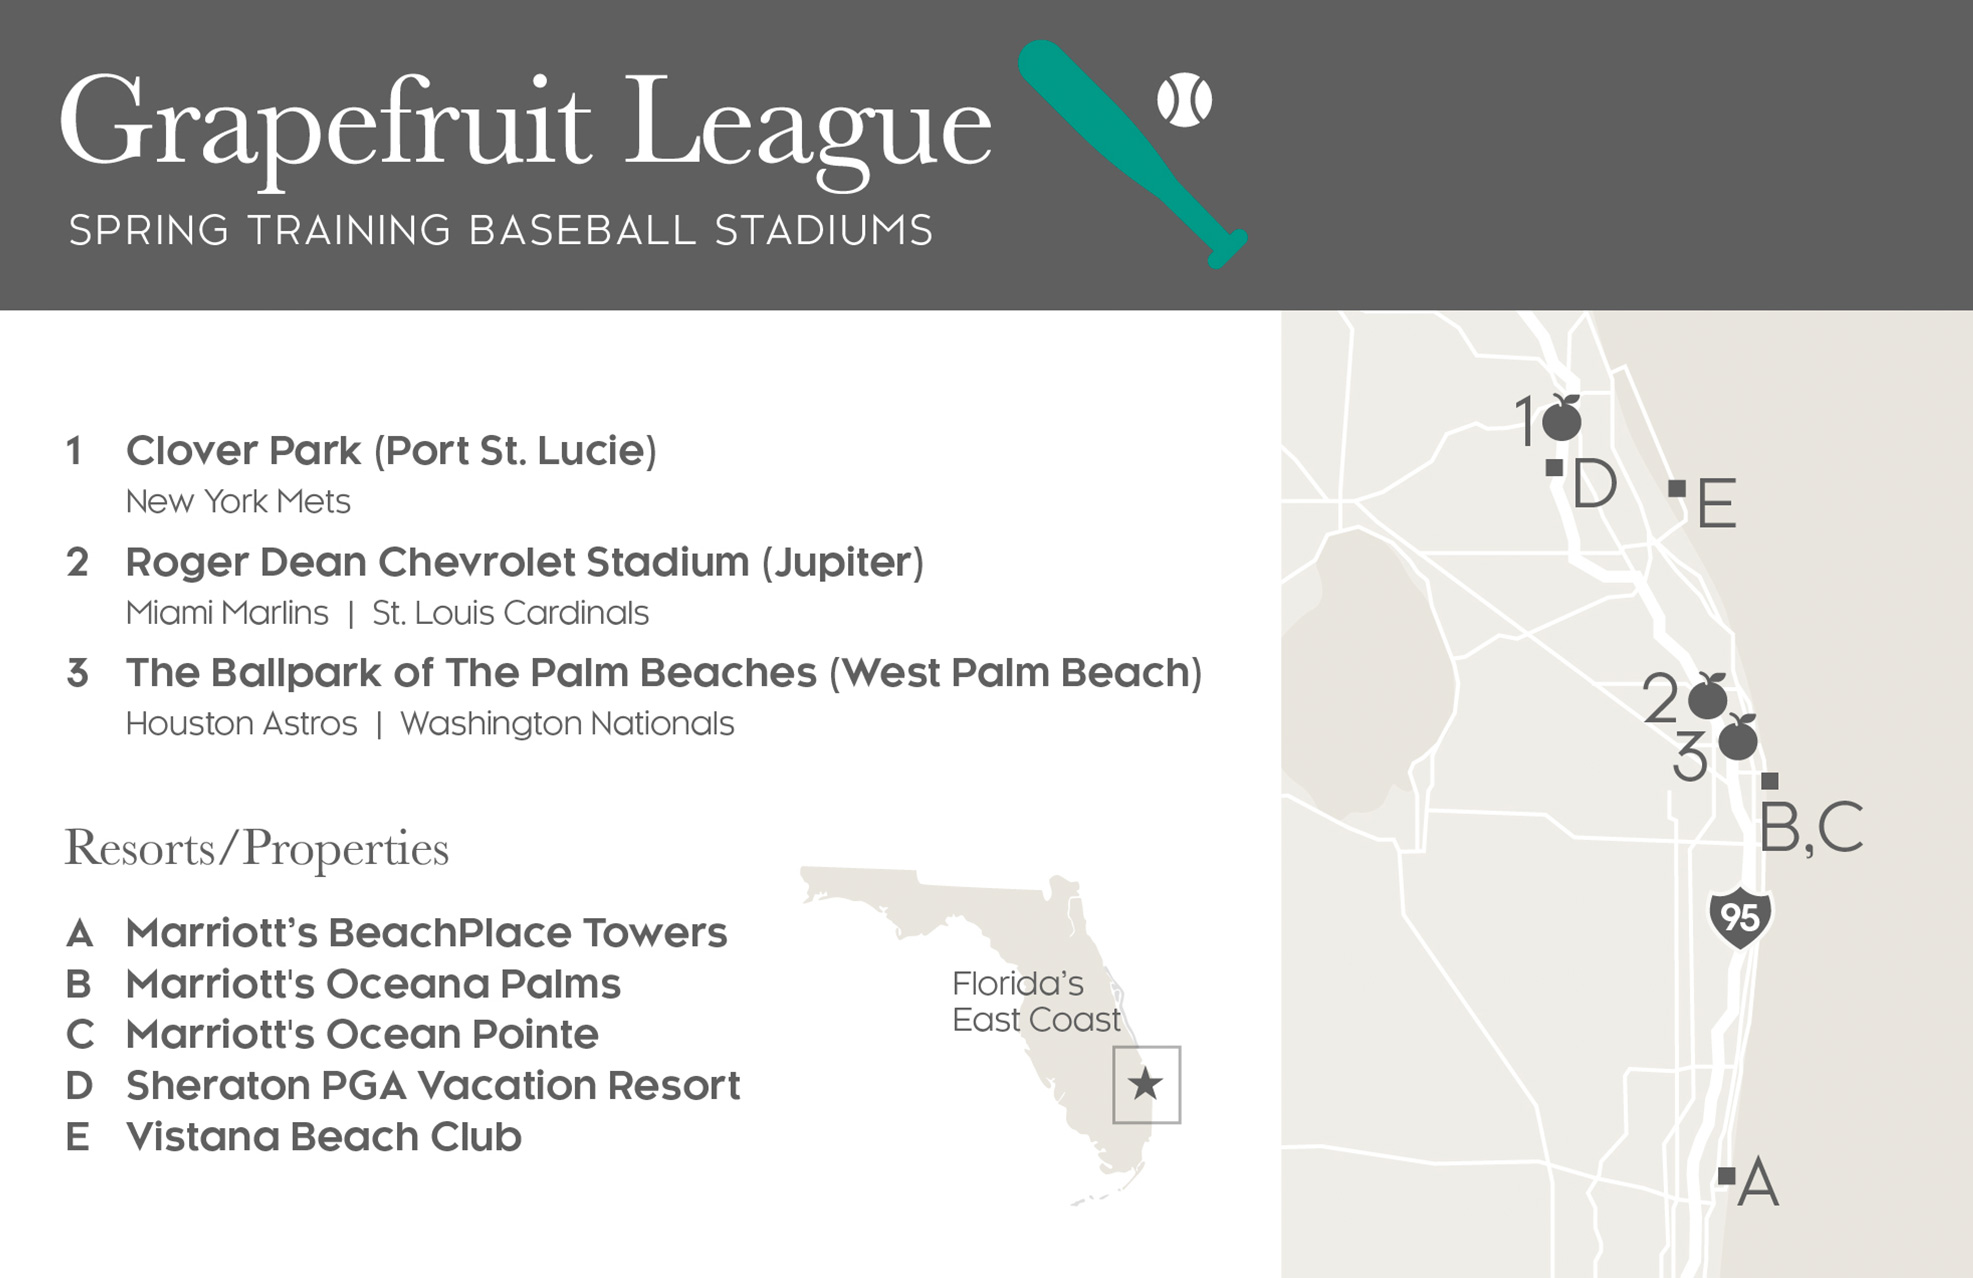 Grapefruit League Stadiums, Teams, and Closest Resorts